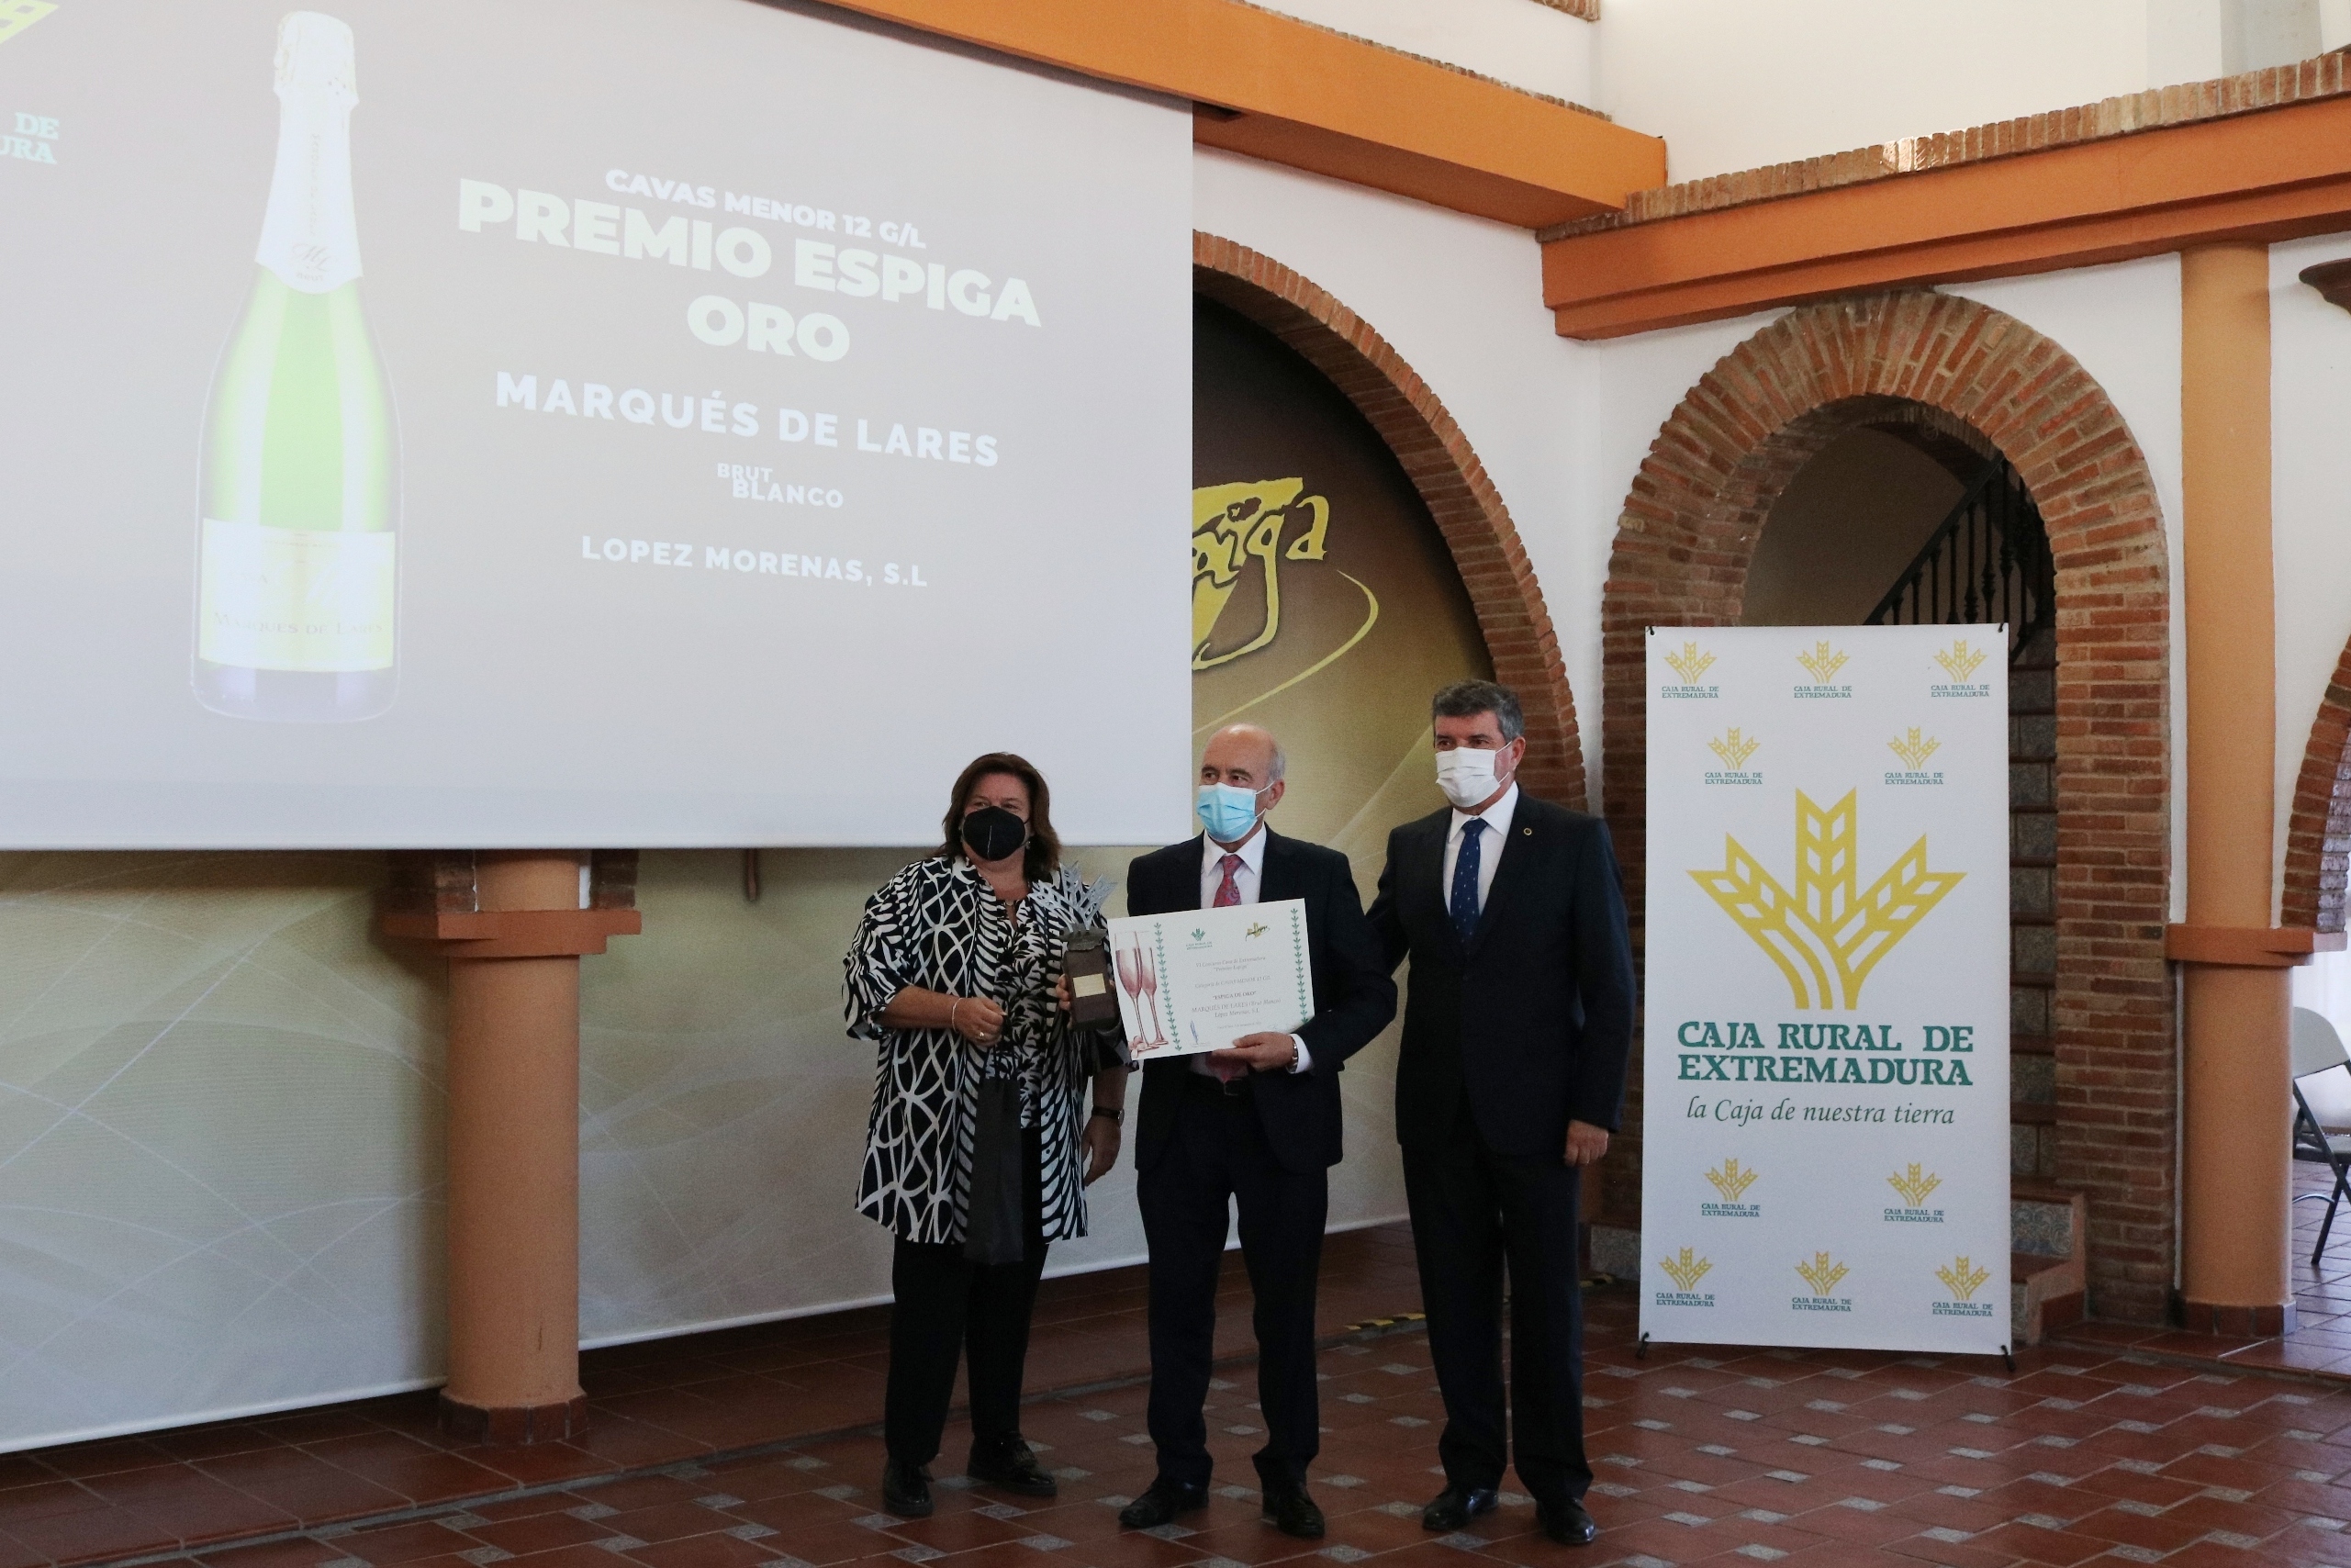 Premio Espiga Oro Cava Menor de 12 gr/l a Marqués de Lares, de Bodegas López Morenas